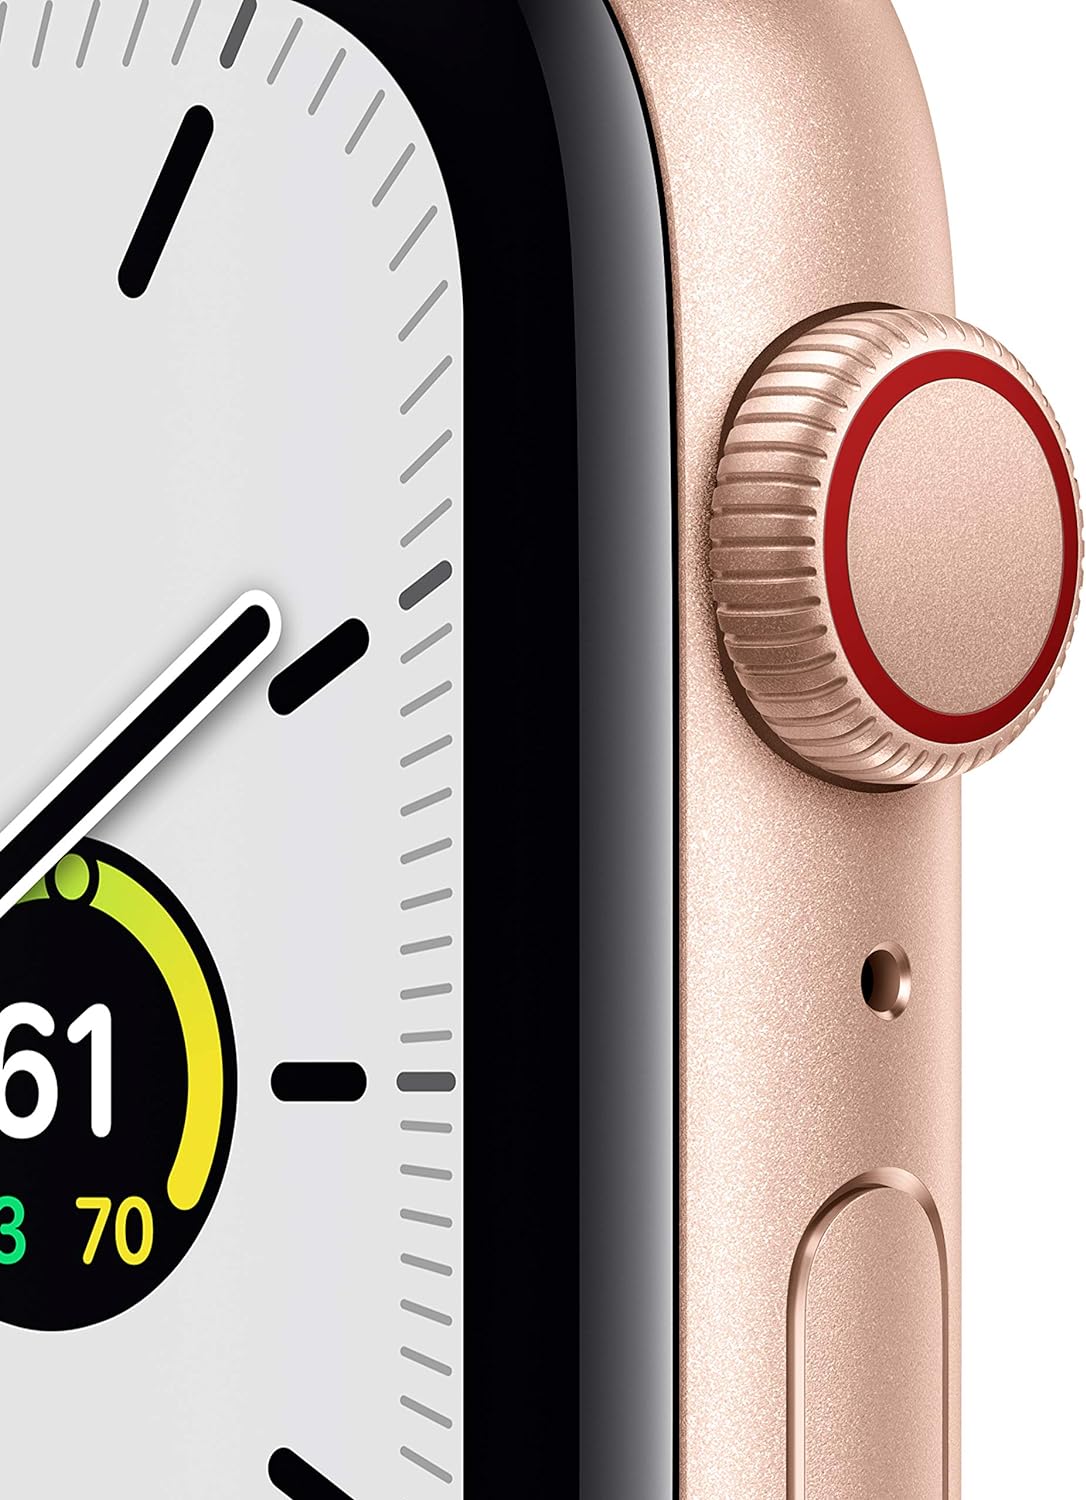 Apple Watch SE 1st Gen (GPS + LTE) 40mm Gold Aluminum Case &amp; Pink Sand Sport Band (Certified Refurbished)